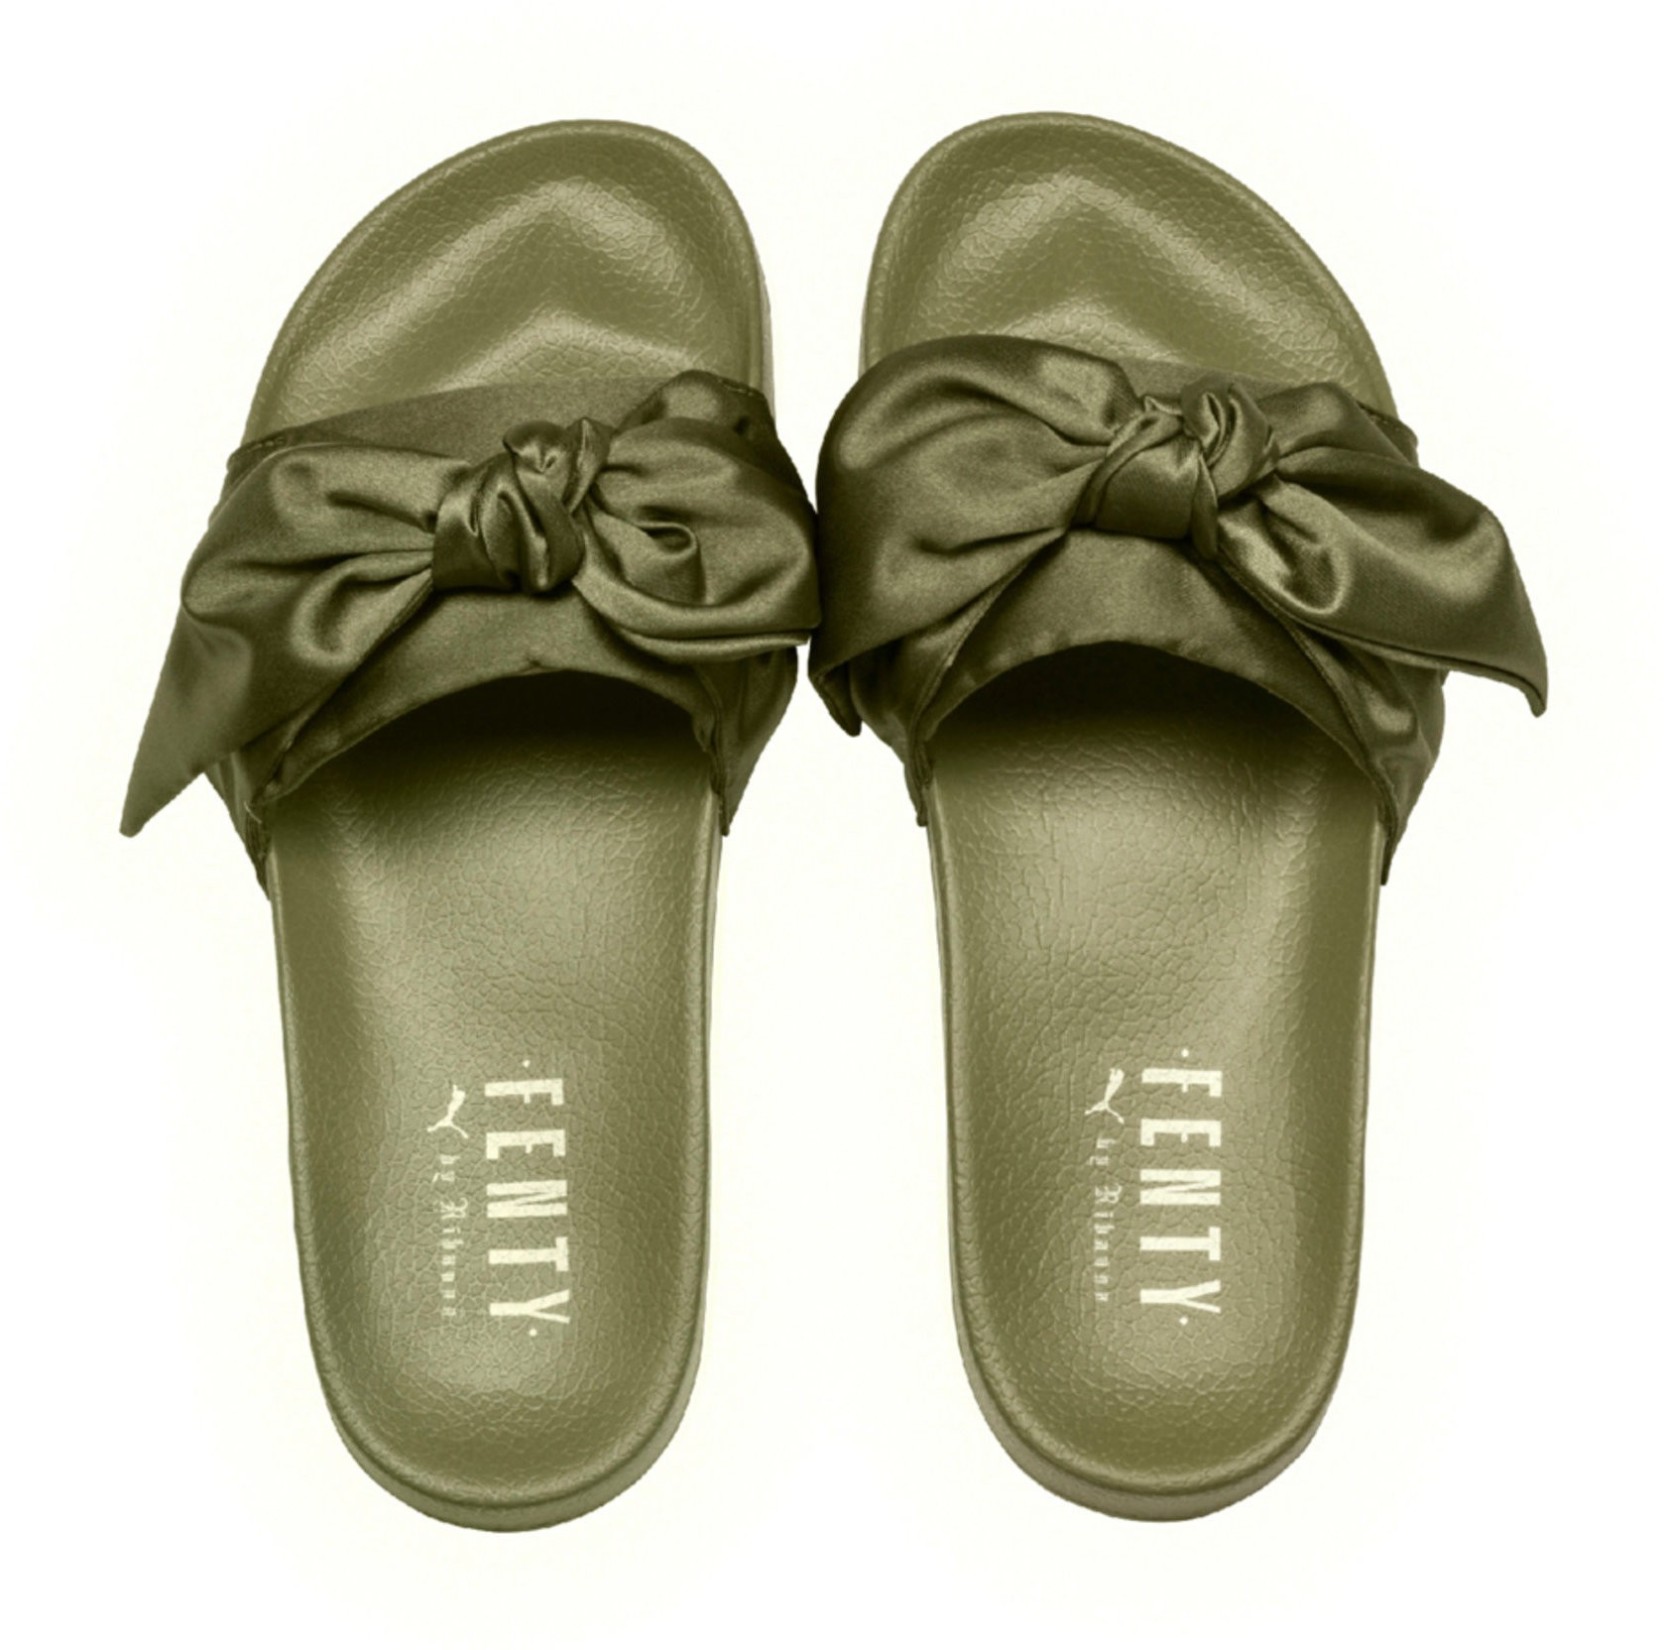 puma fenty slippers release date